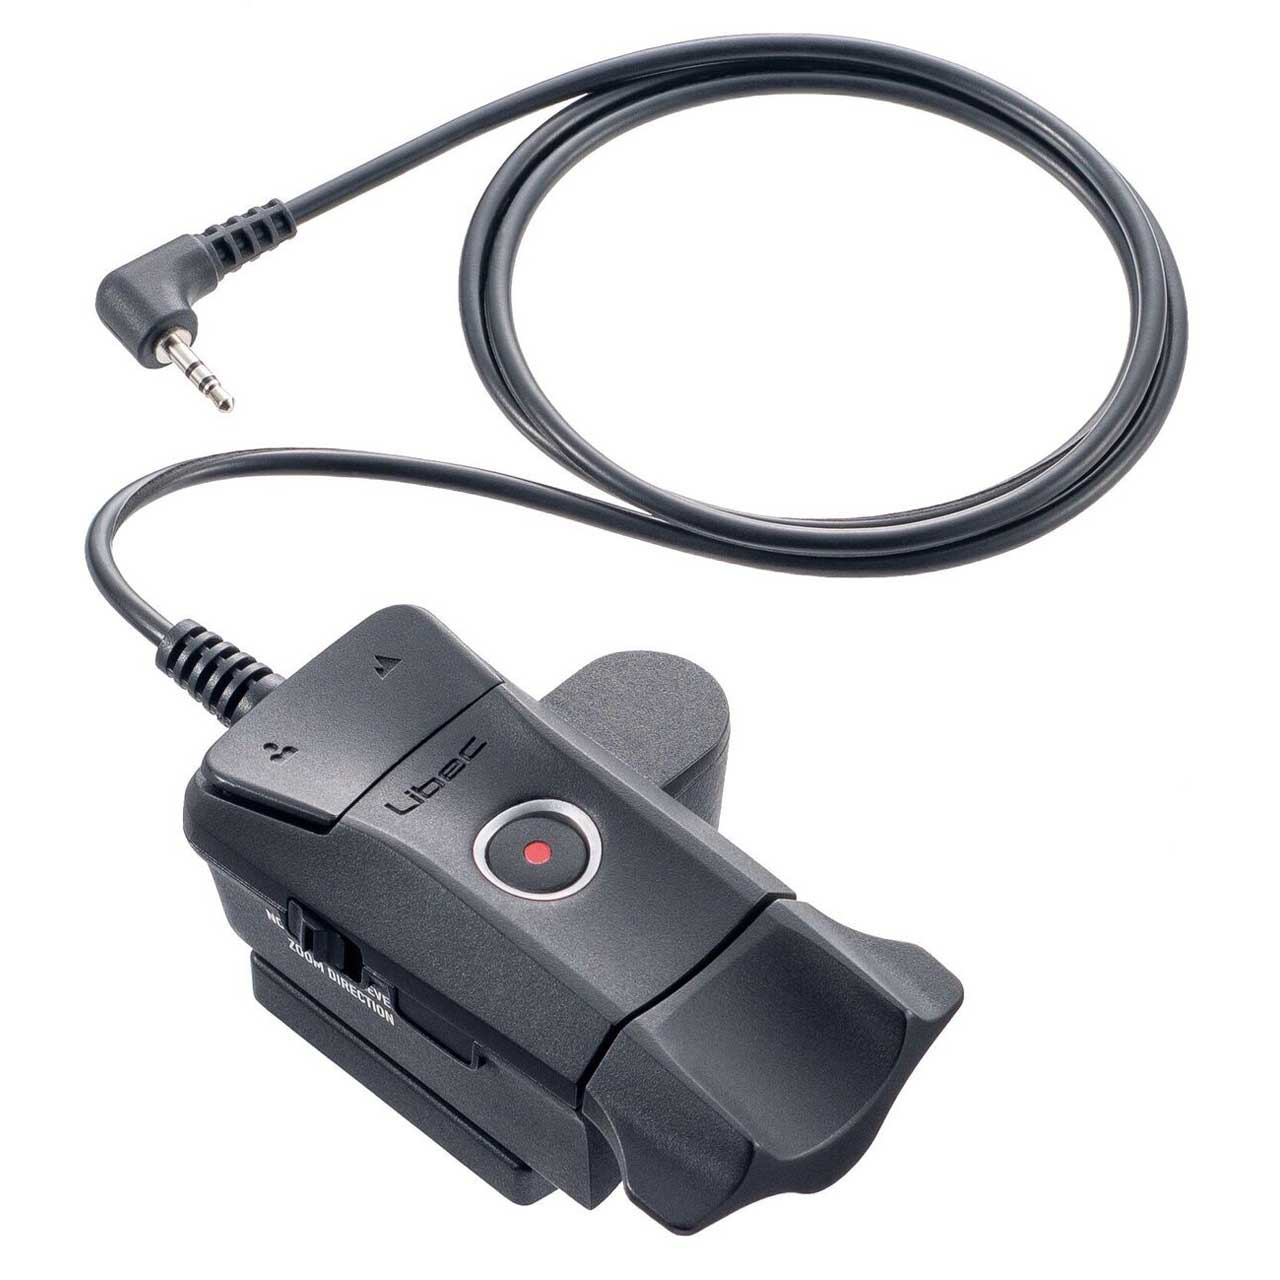 Blackmagic Design USB-C Cable for Focus or Zoom